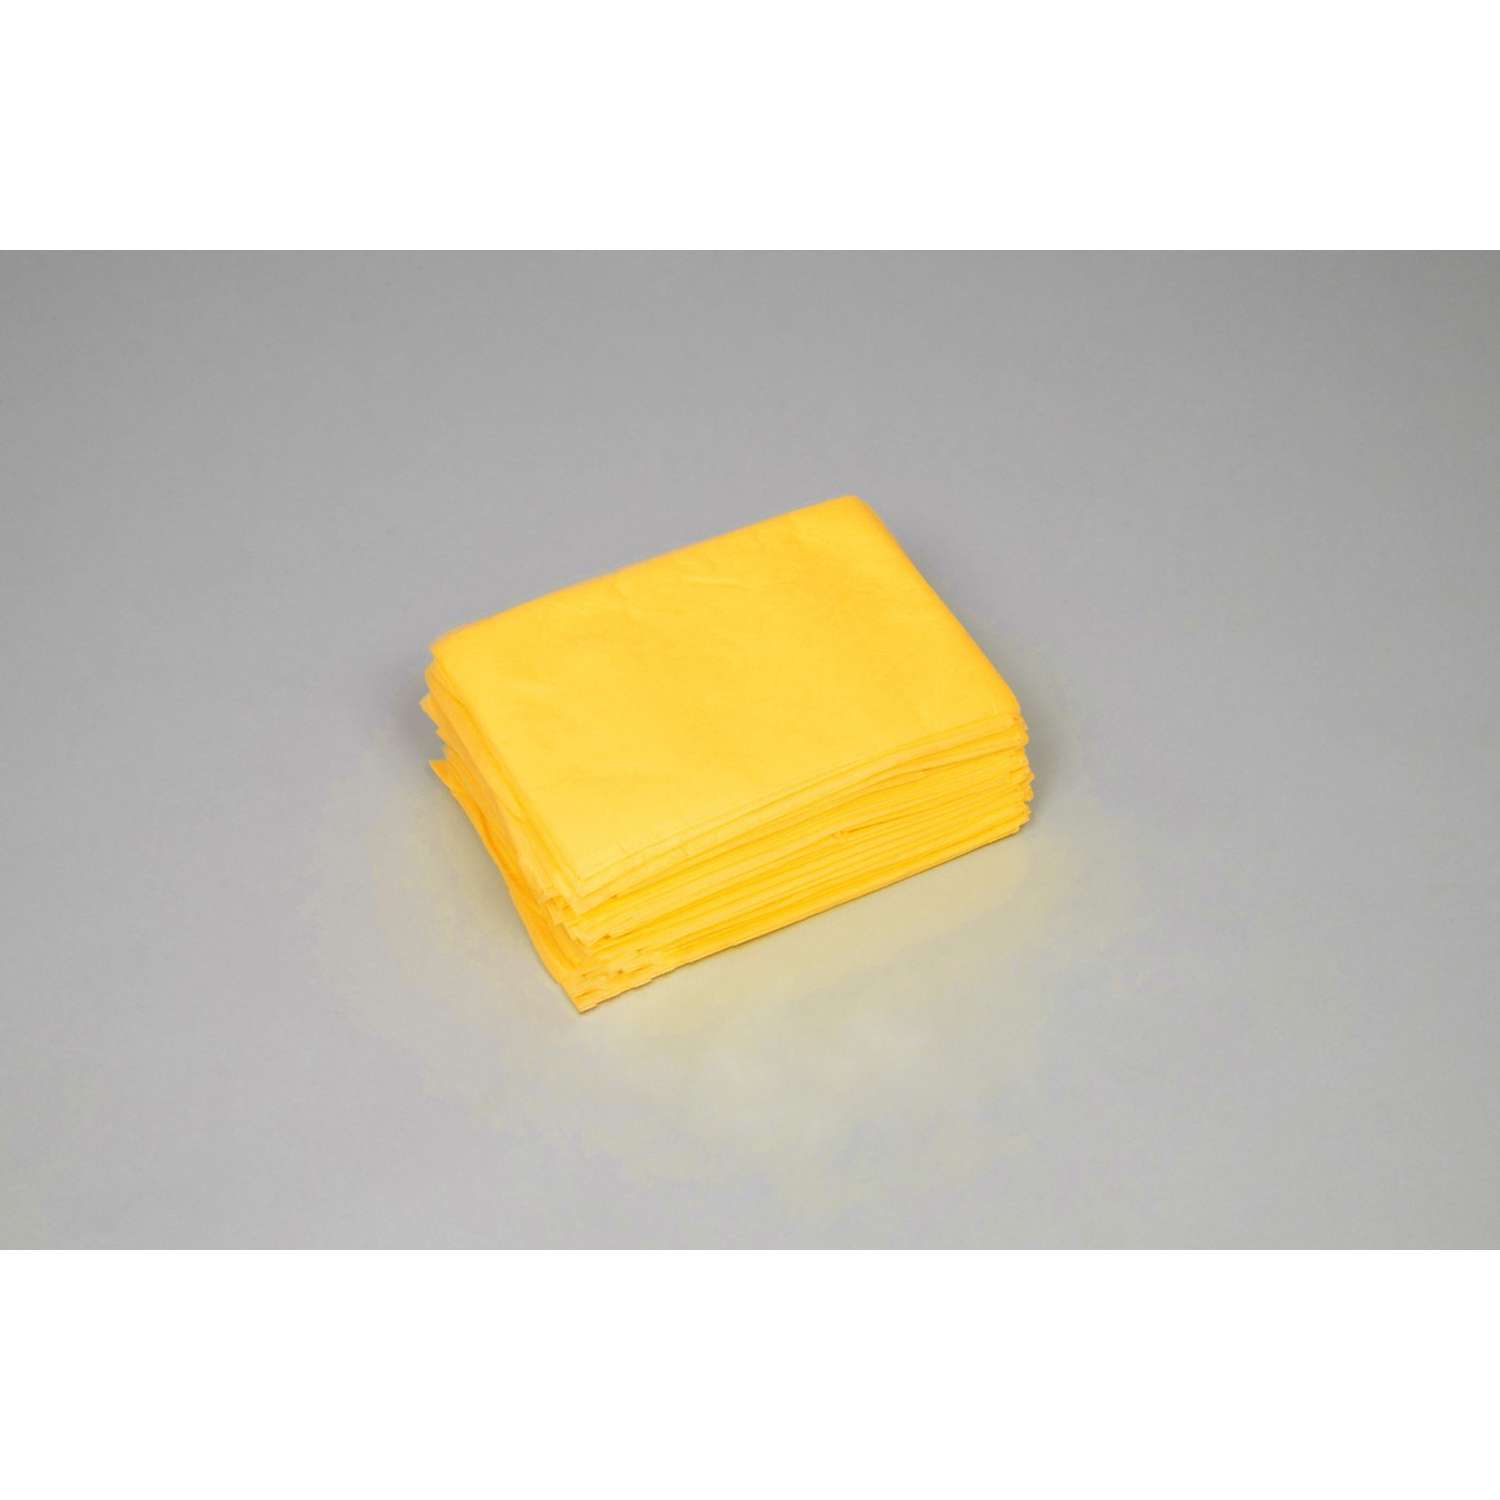 Простыни одноразовые Чистовье 200 х 70 желтые стандарт из спанбонда - фото 1